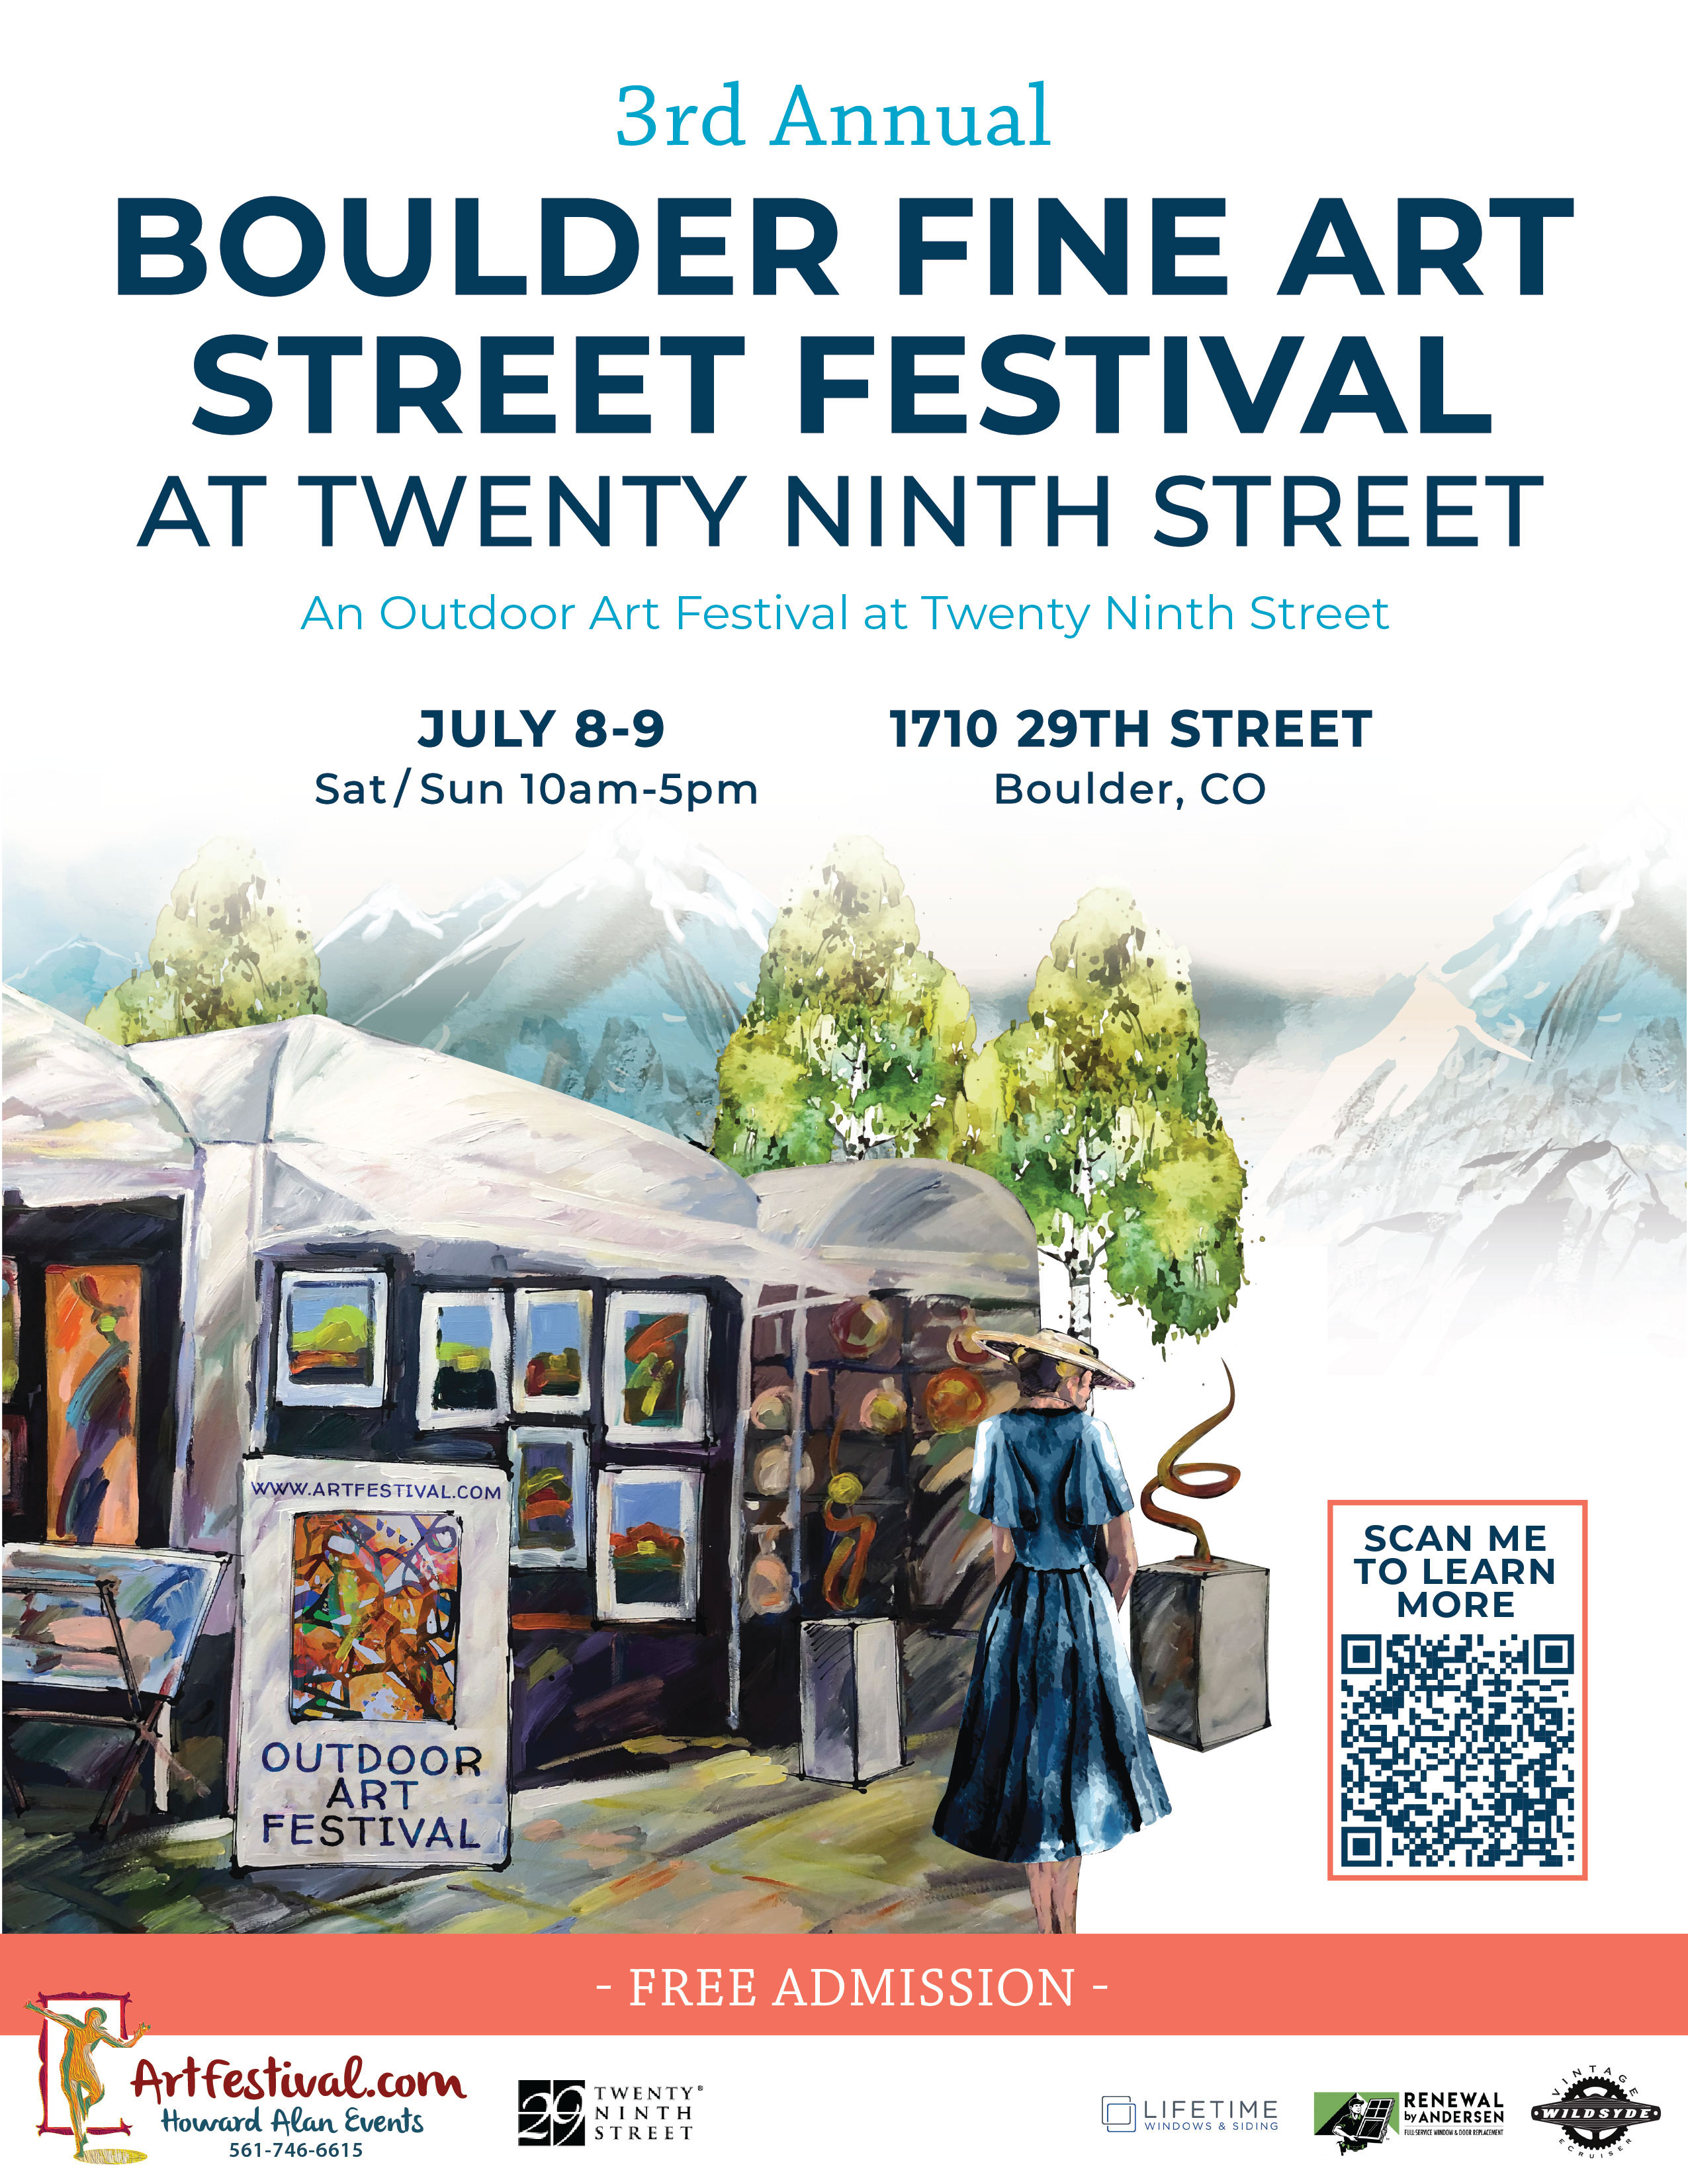 3rd Annual Boulder Fine Art Street Festival at Twenty Ninth Street